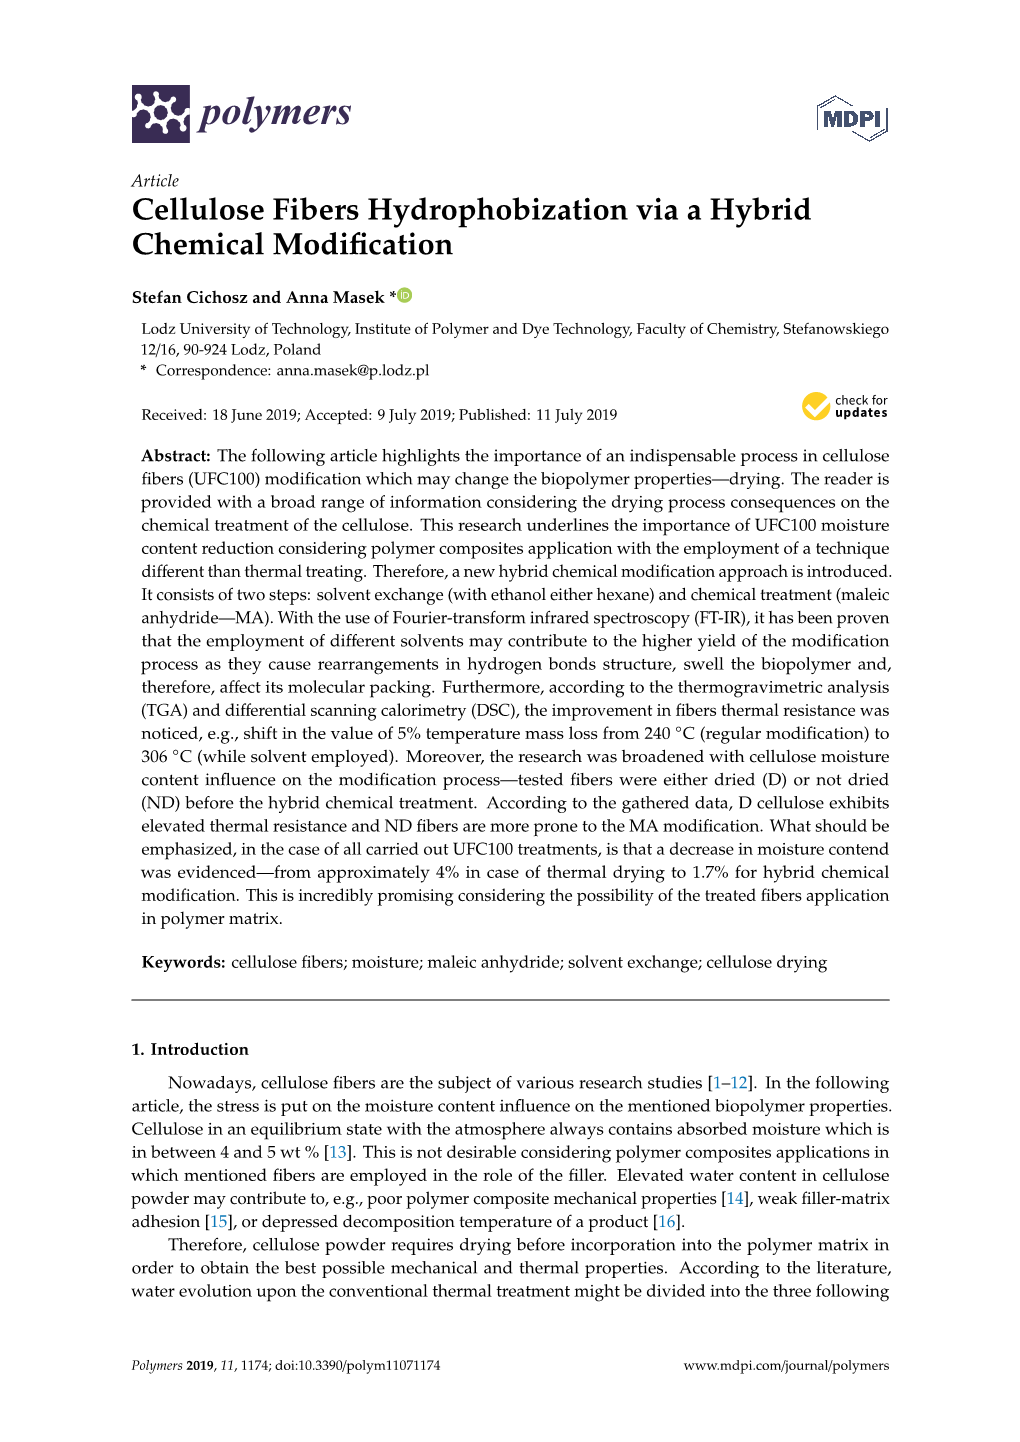 Cellulose Fibers Hydrophobization Via a Hybrid Chemical Modification